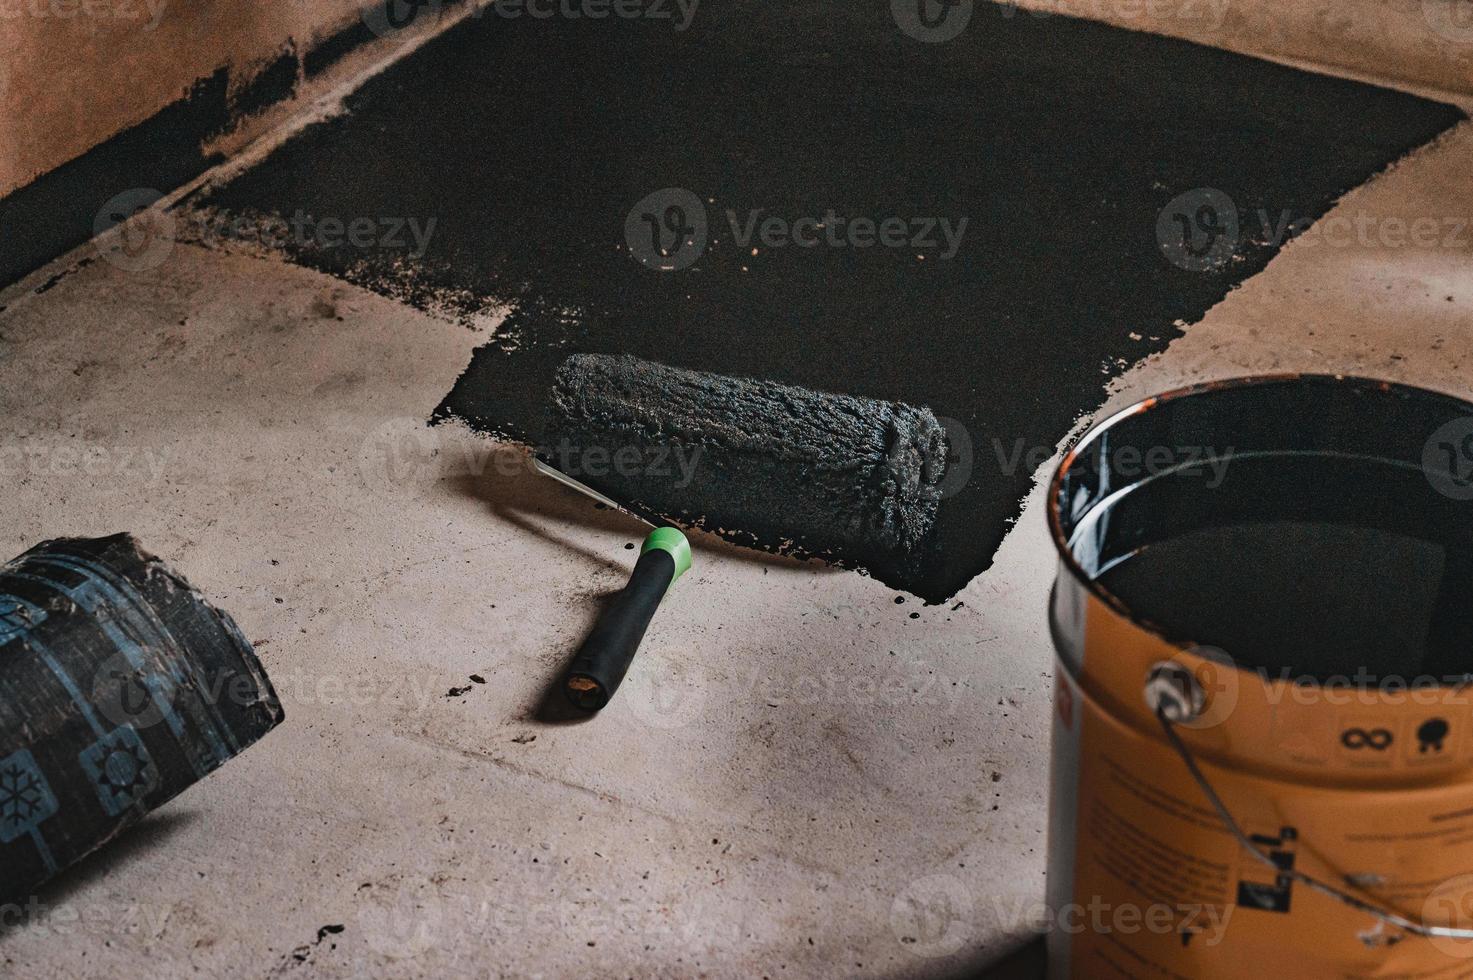 Aplicación de resina caliente al piso para impermeabilización, rodillo y balde de resina. foto